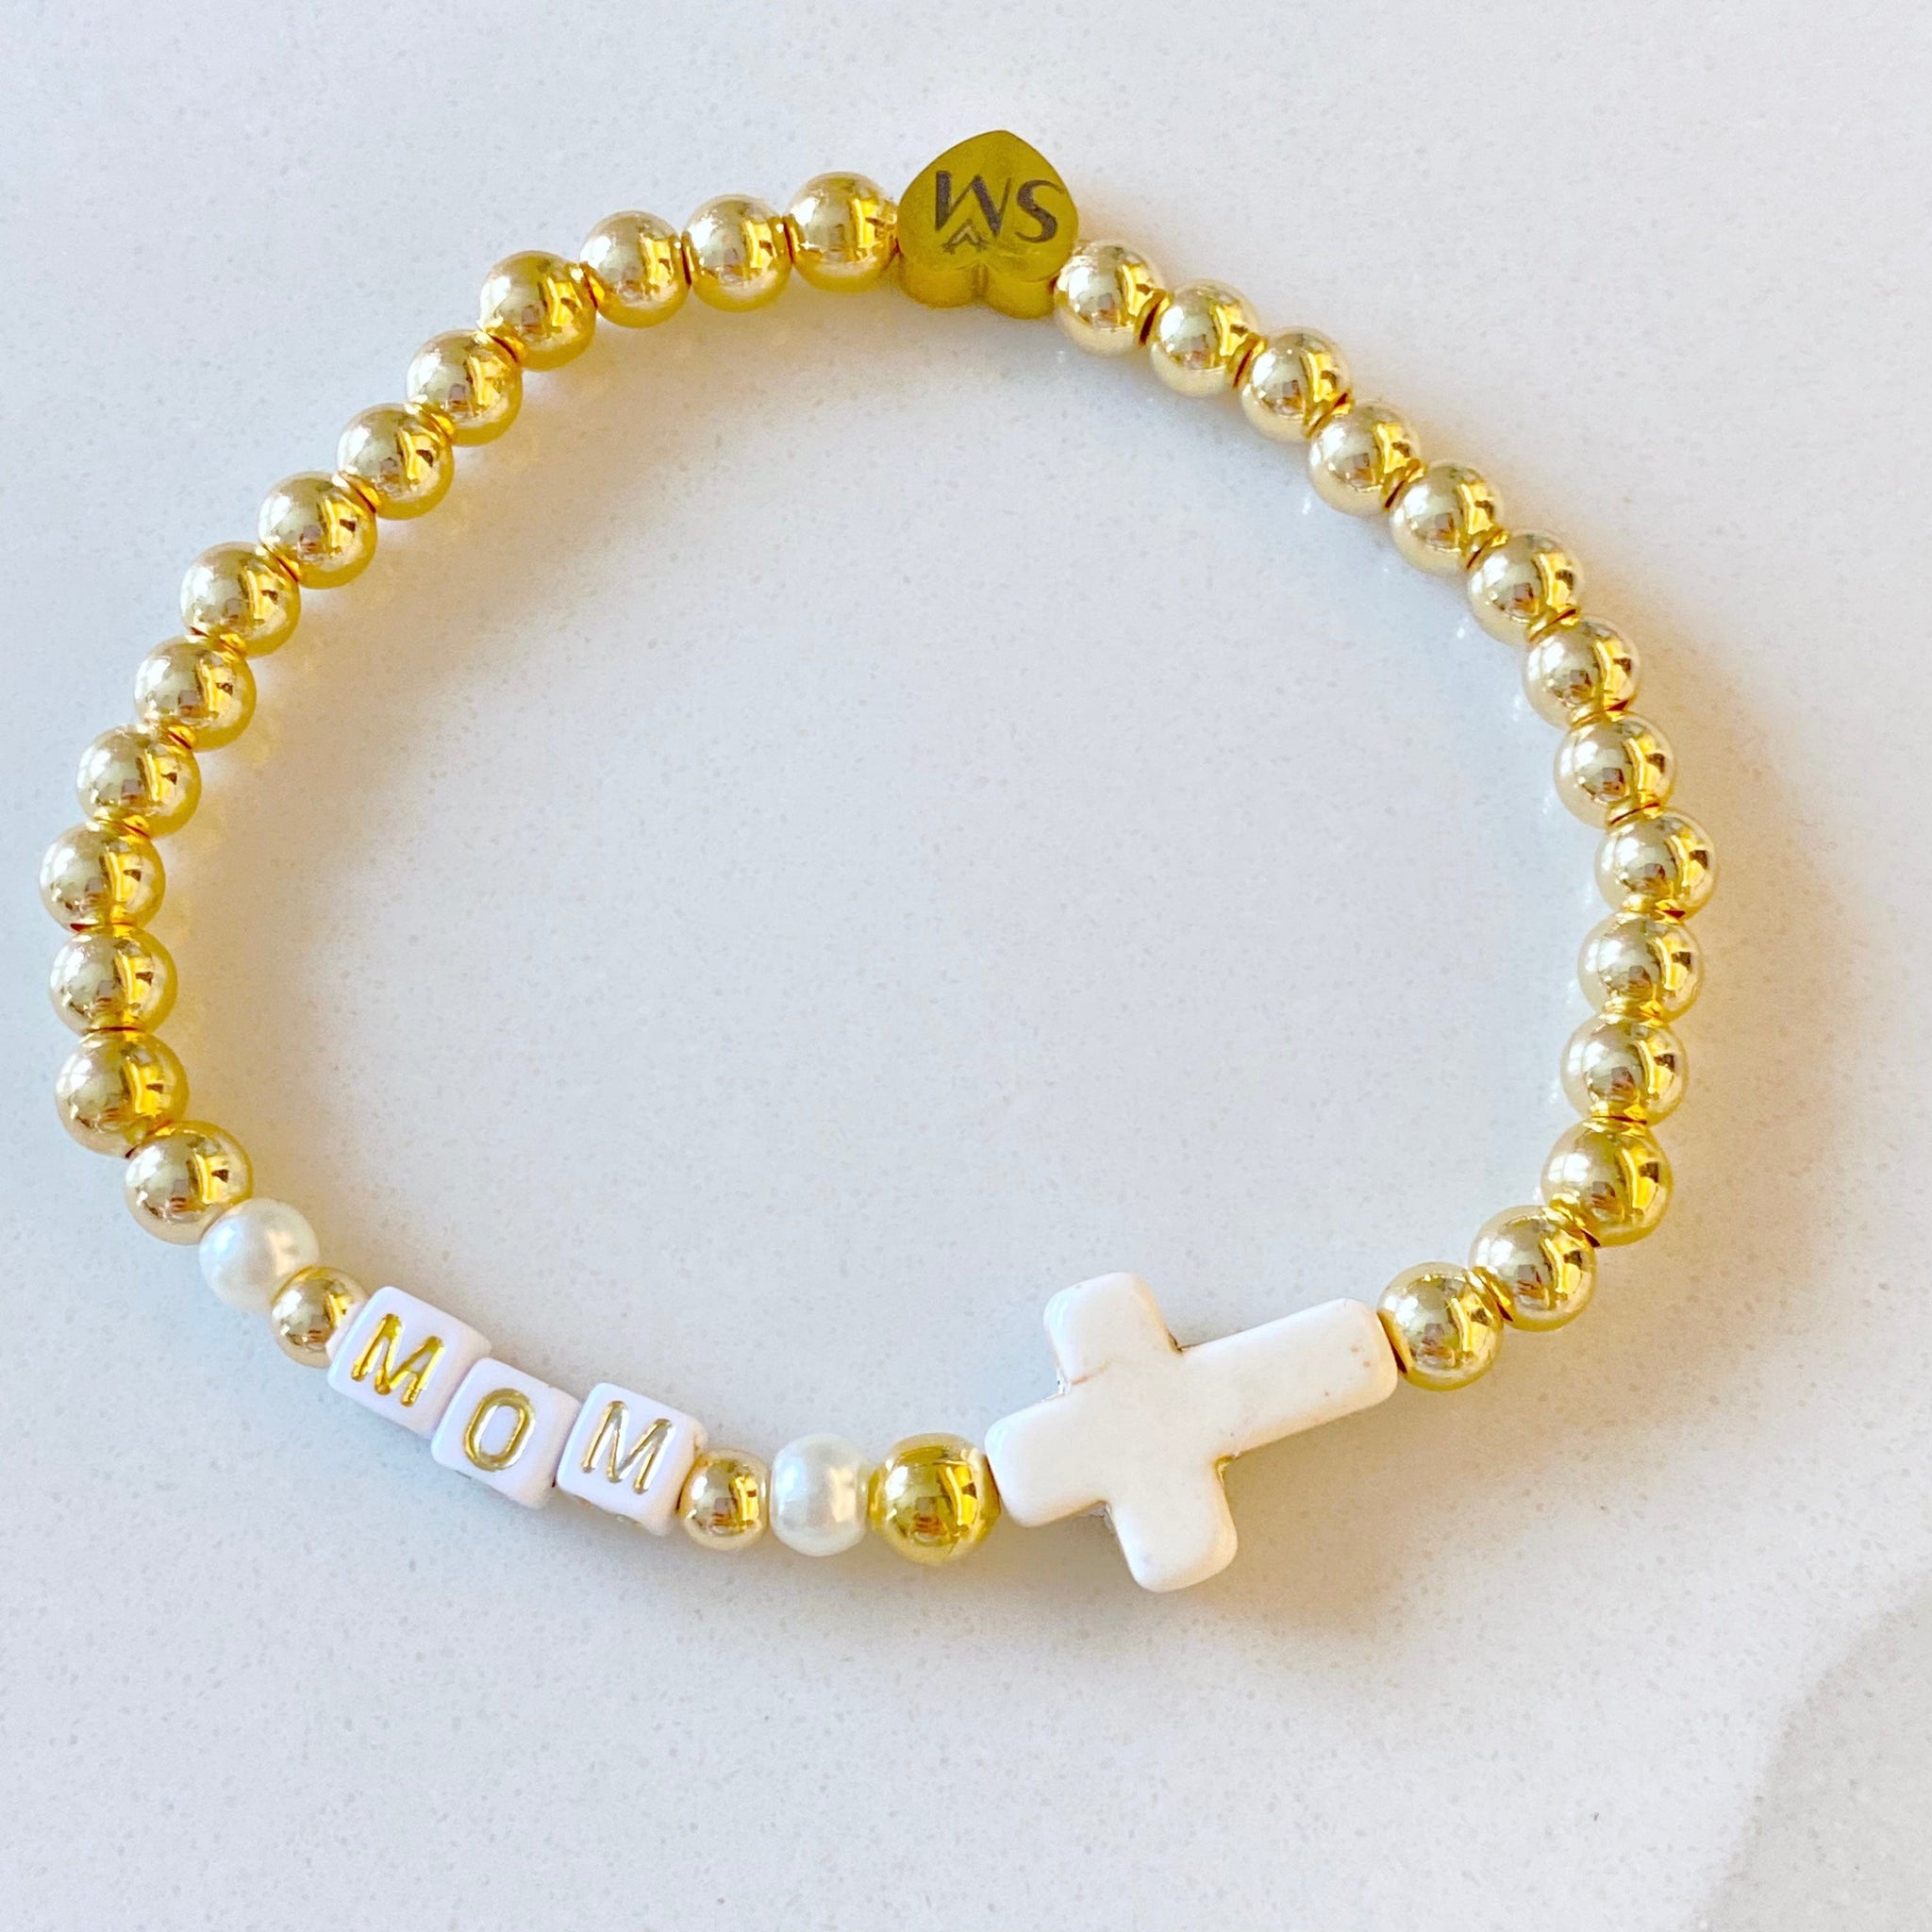 "Mom"/Name Bead Bracelet with Cross